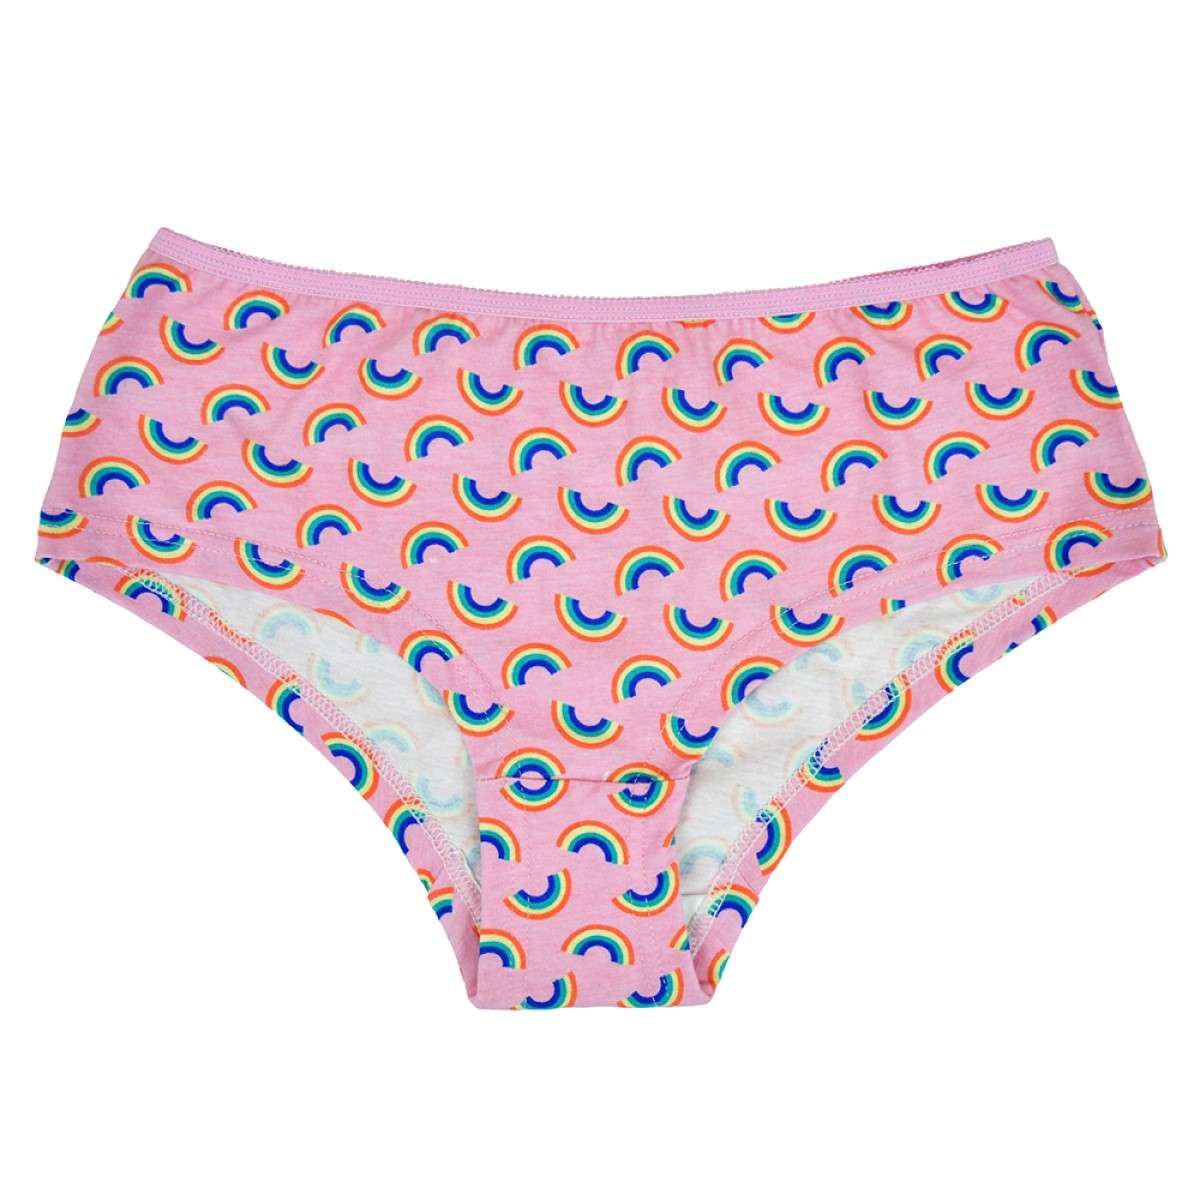 3 Pack Girls Rainbow Print Underwear Shorts Knickers